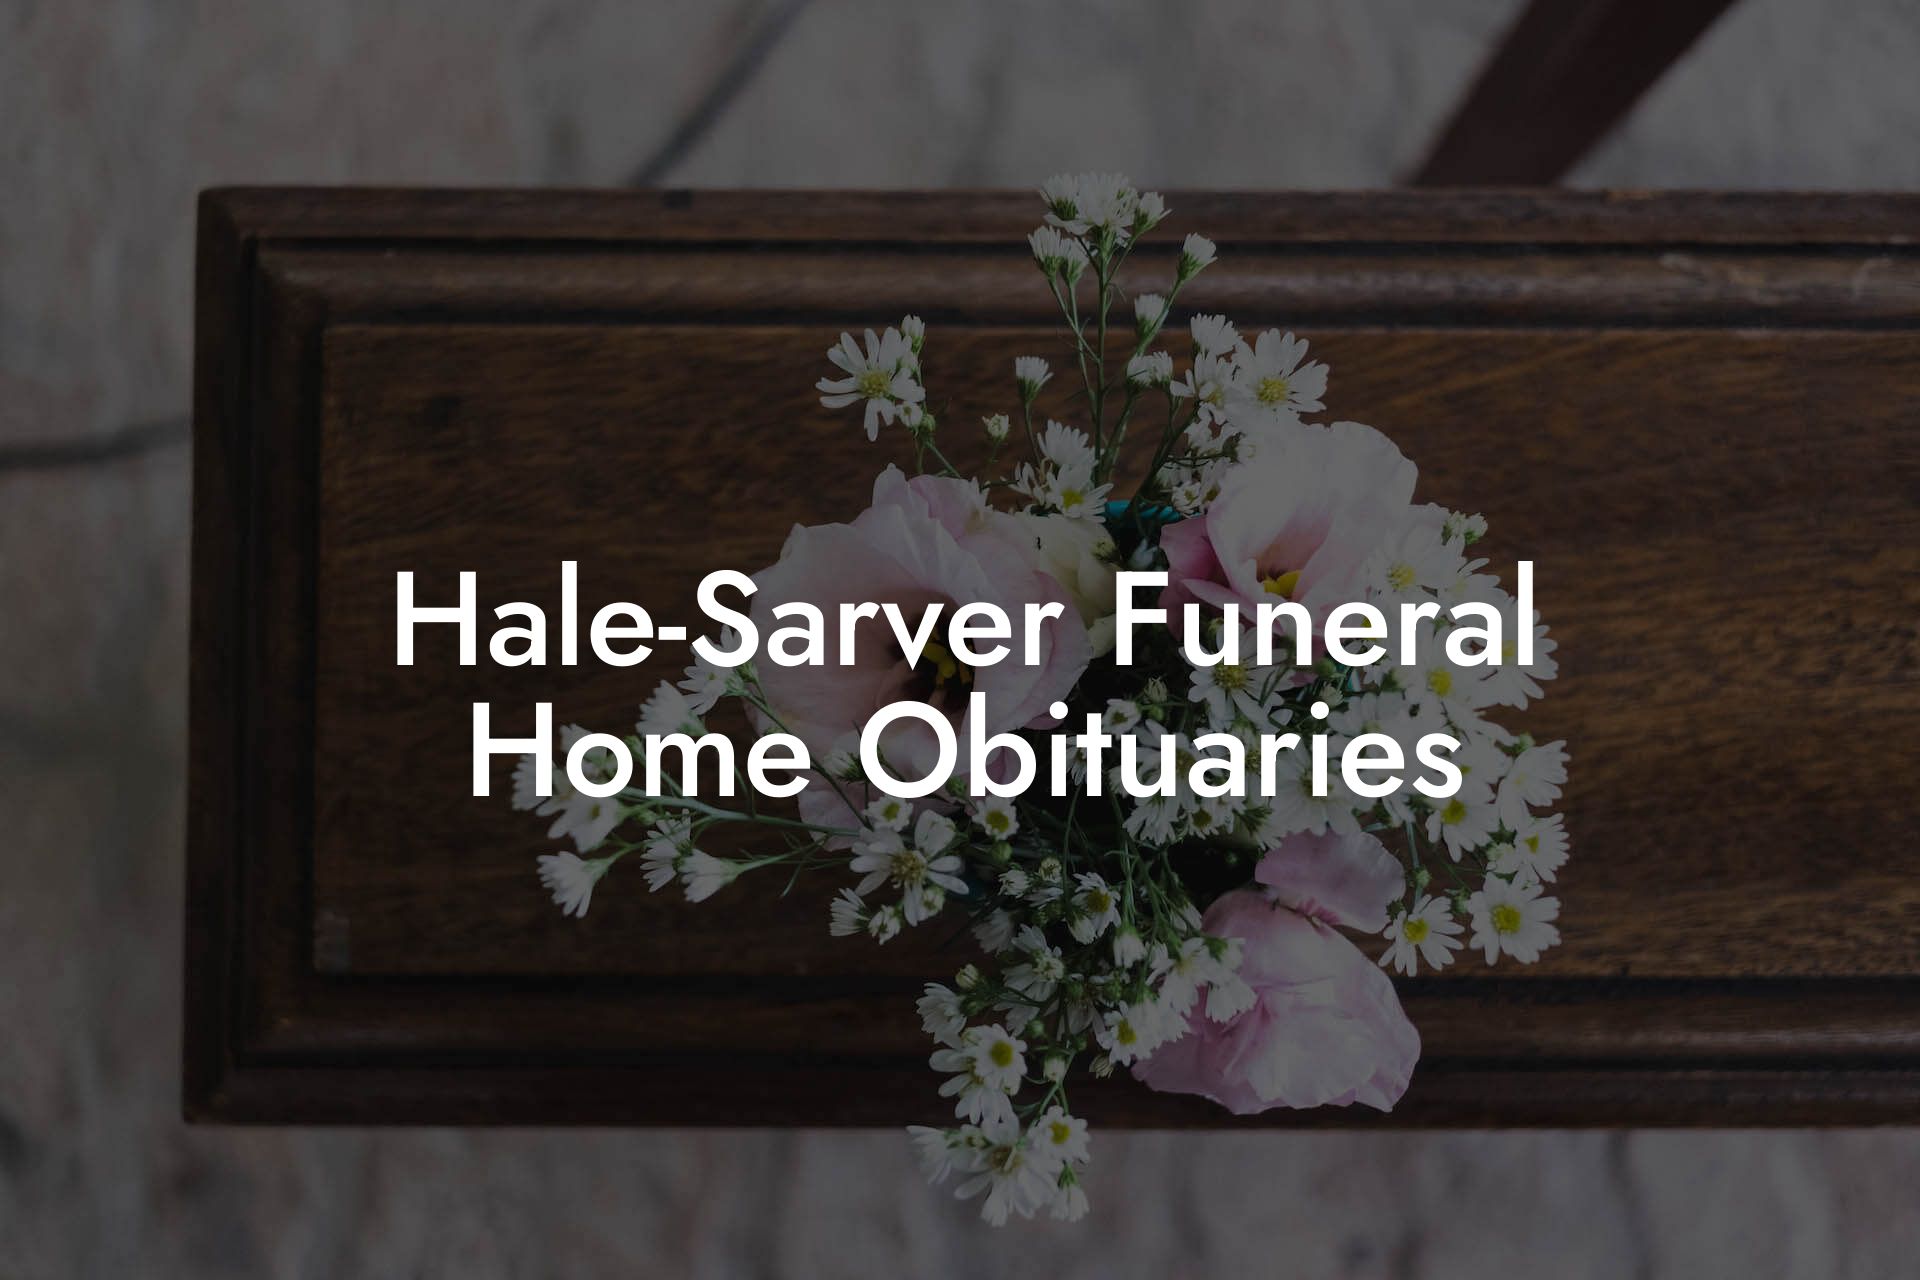 Hale-Sarver Funeral Home Obituaries